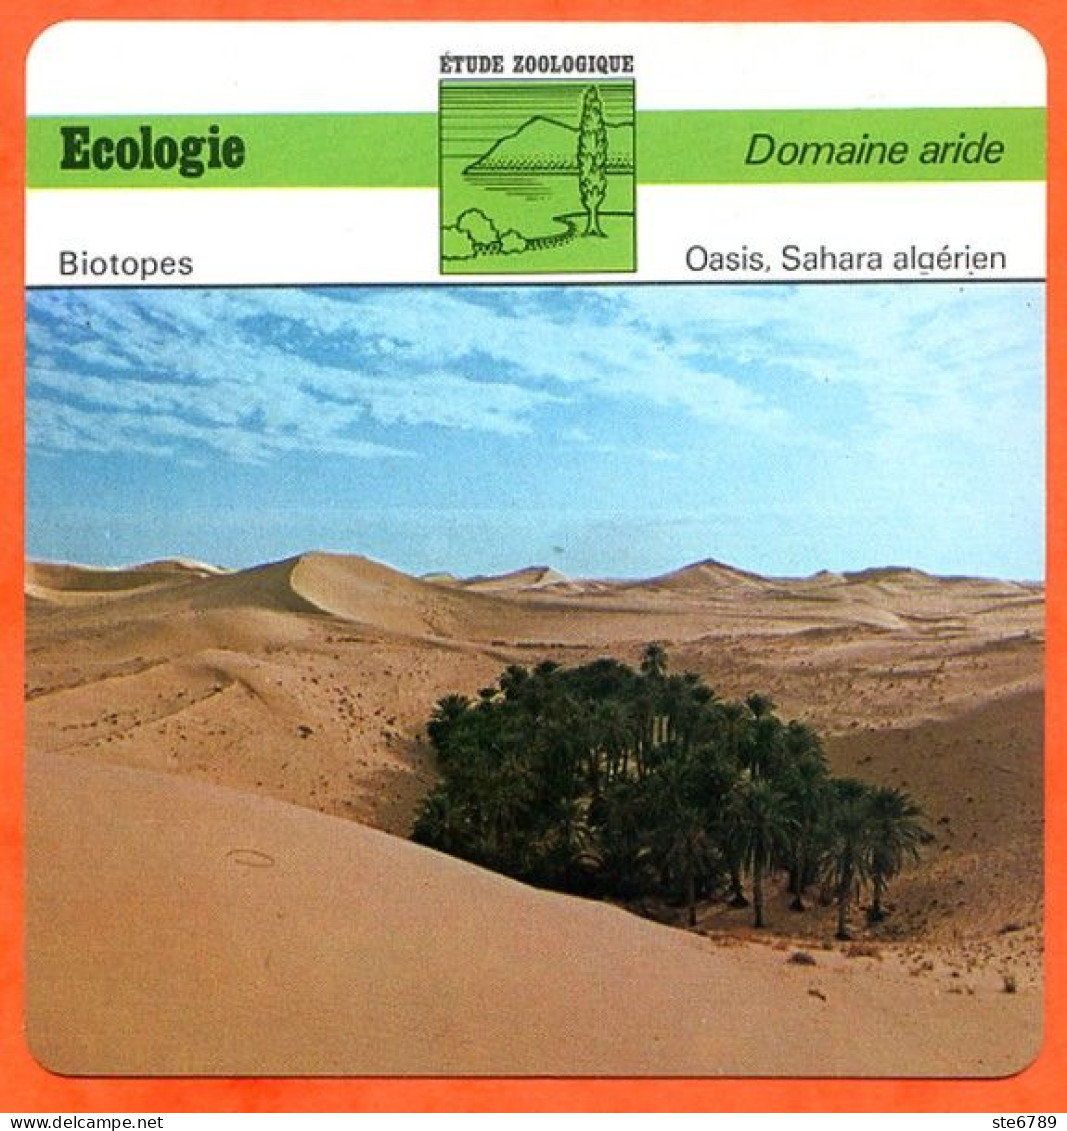 Fiche Ecologie Oasis Sahara Algérien  Illustration Oasis  Domaine Aride Etude Zoologique Biotopes - Aardrijkskunde